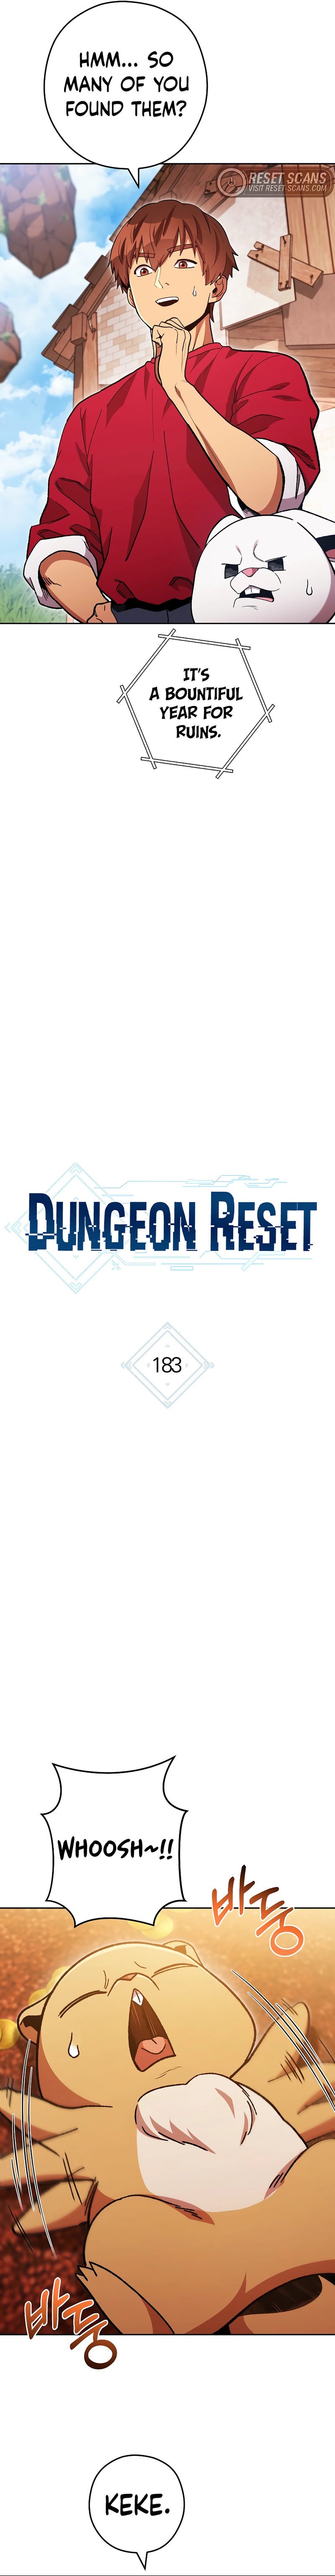 dungeon-reset-chap-183-1